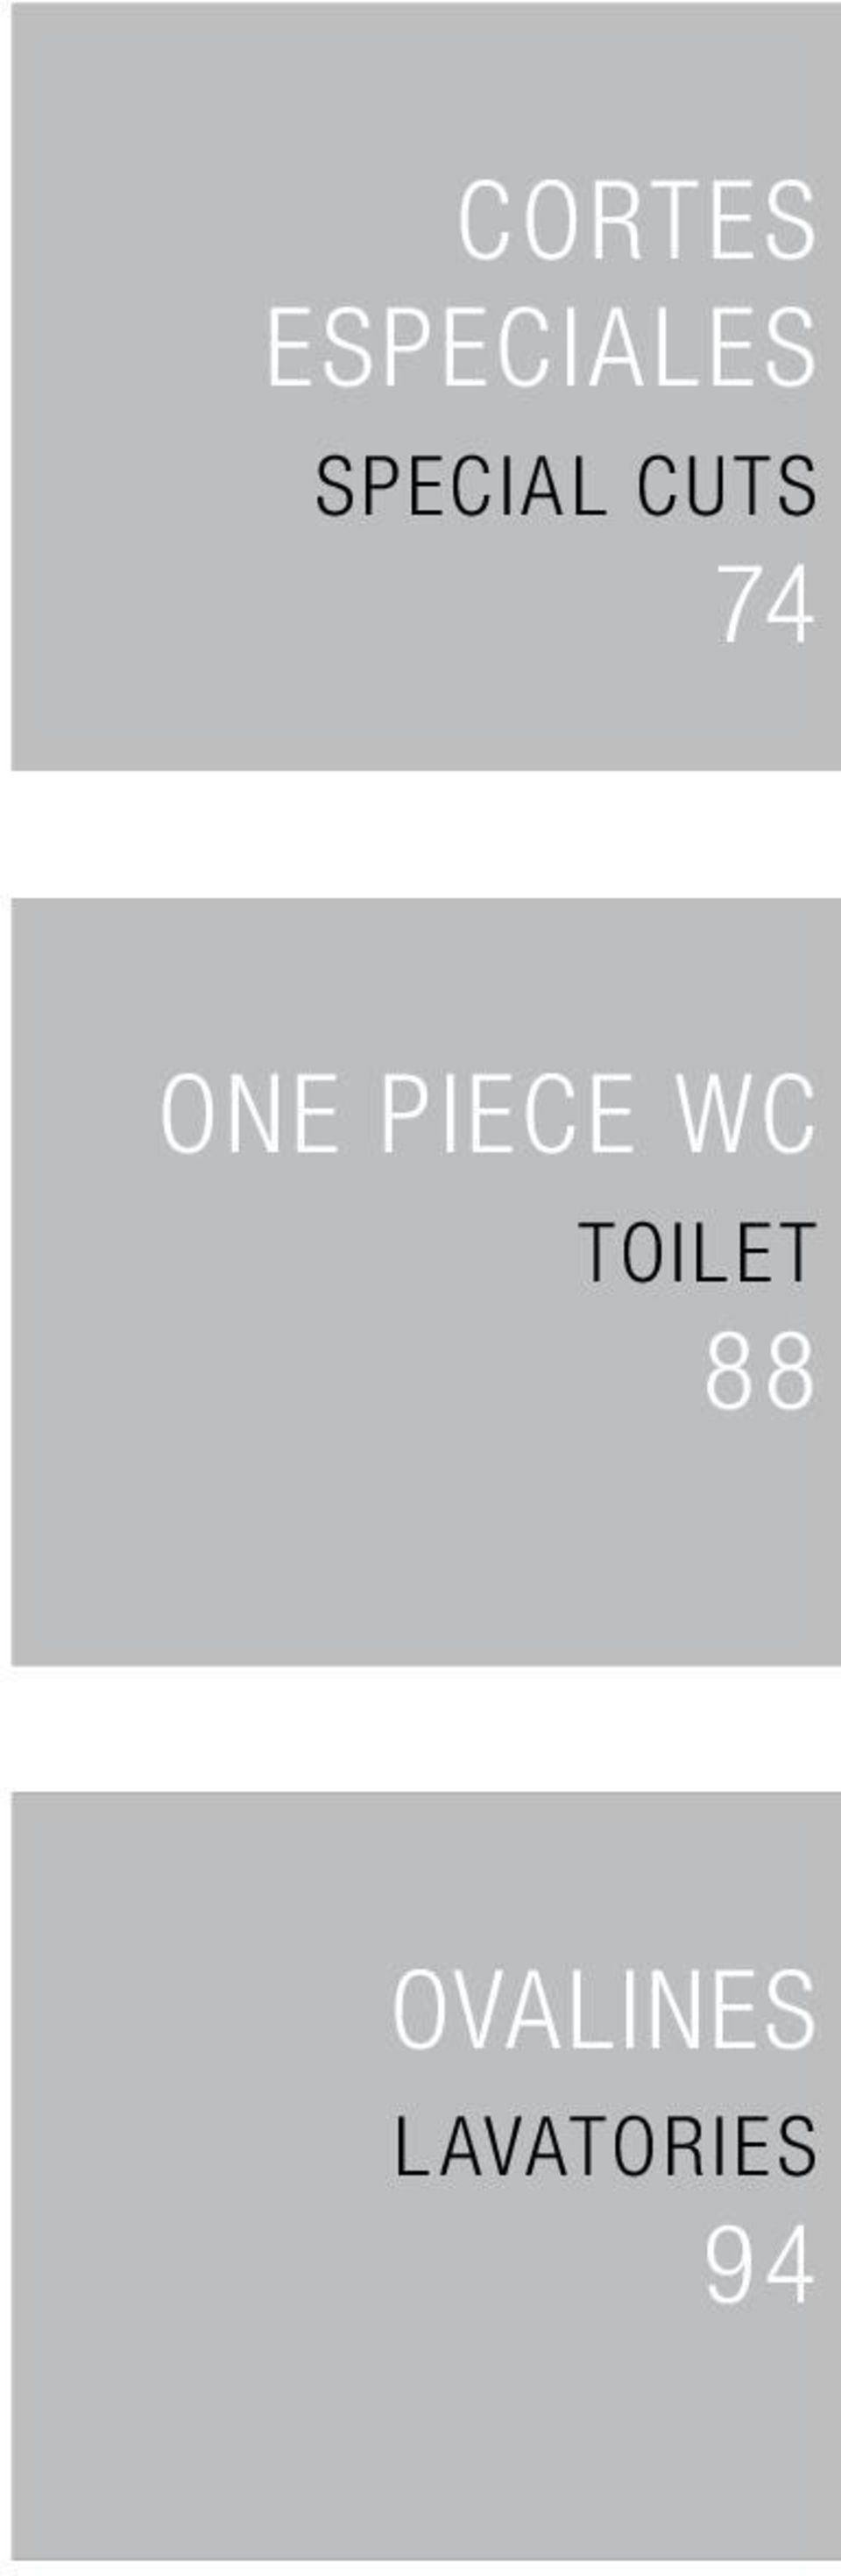 piece wc Toilet 88